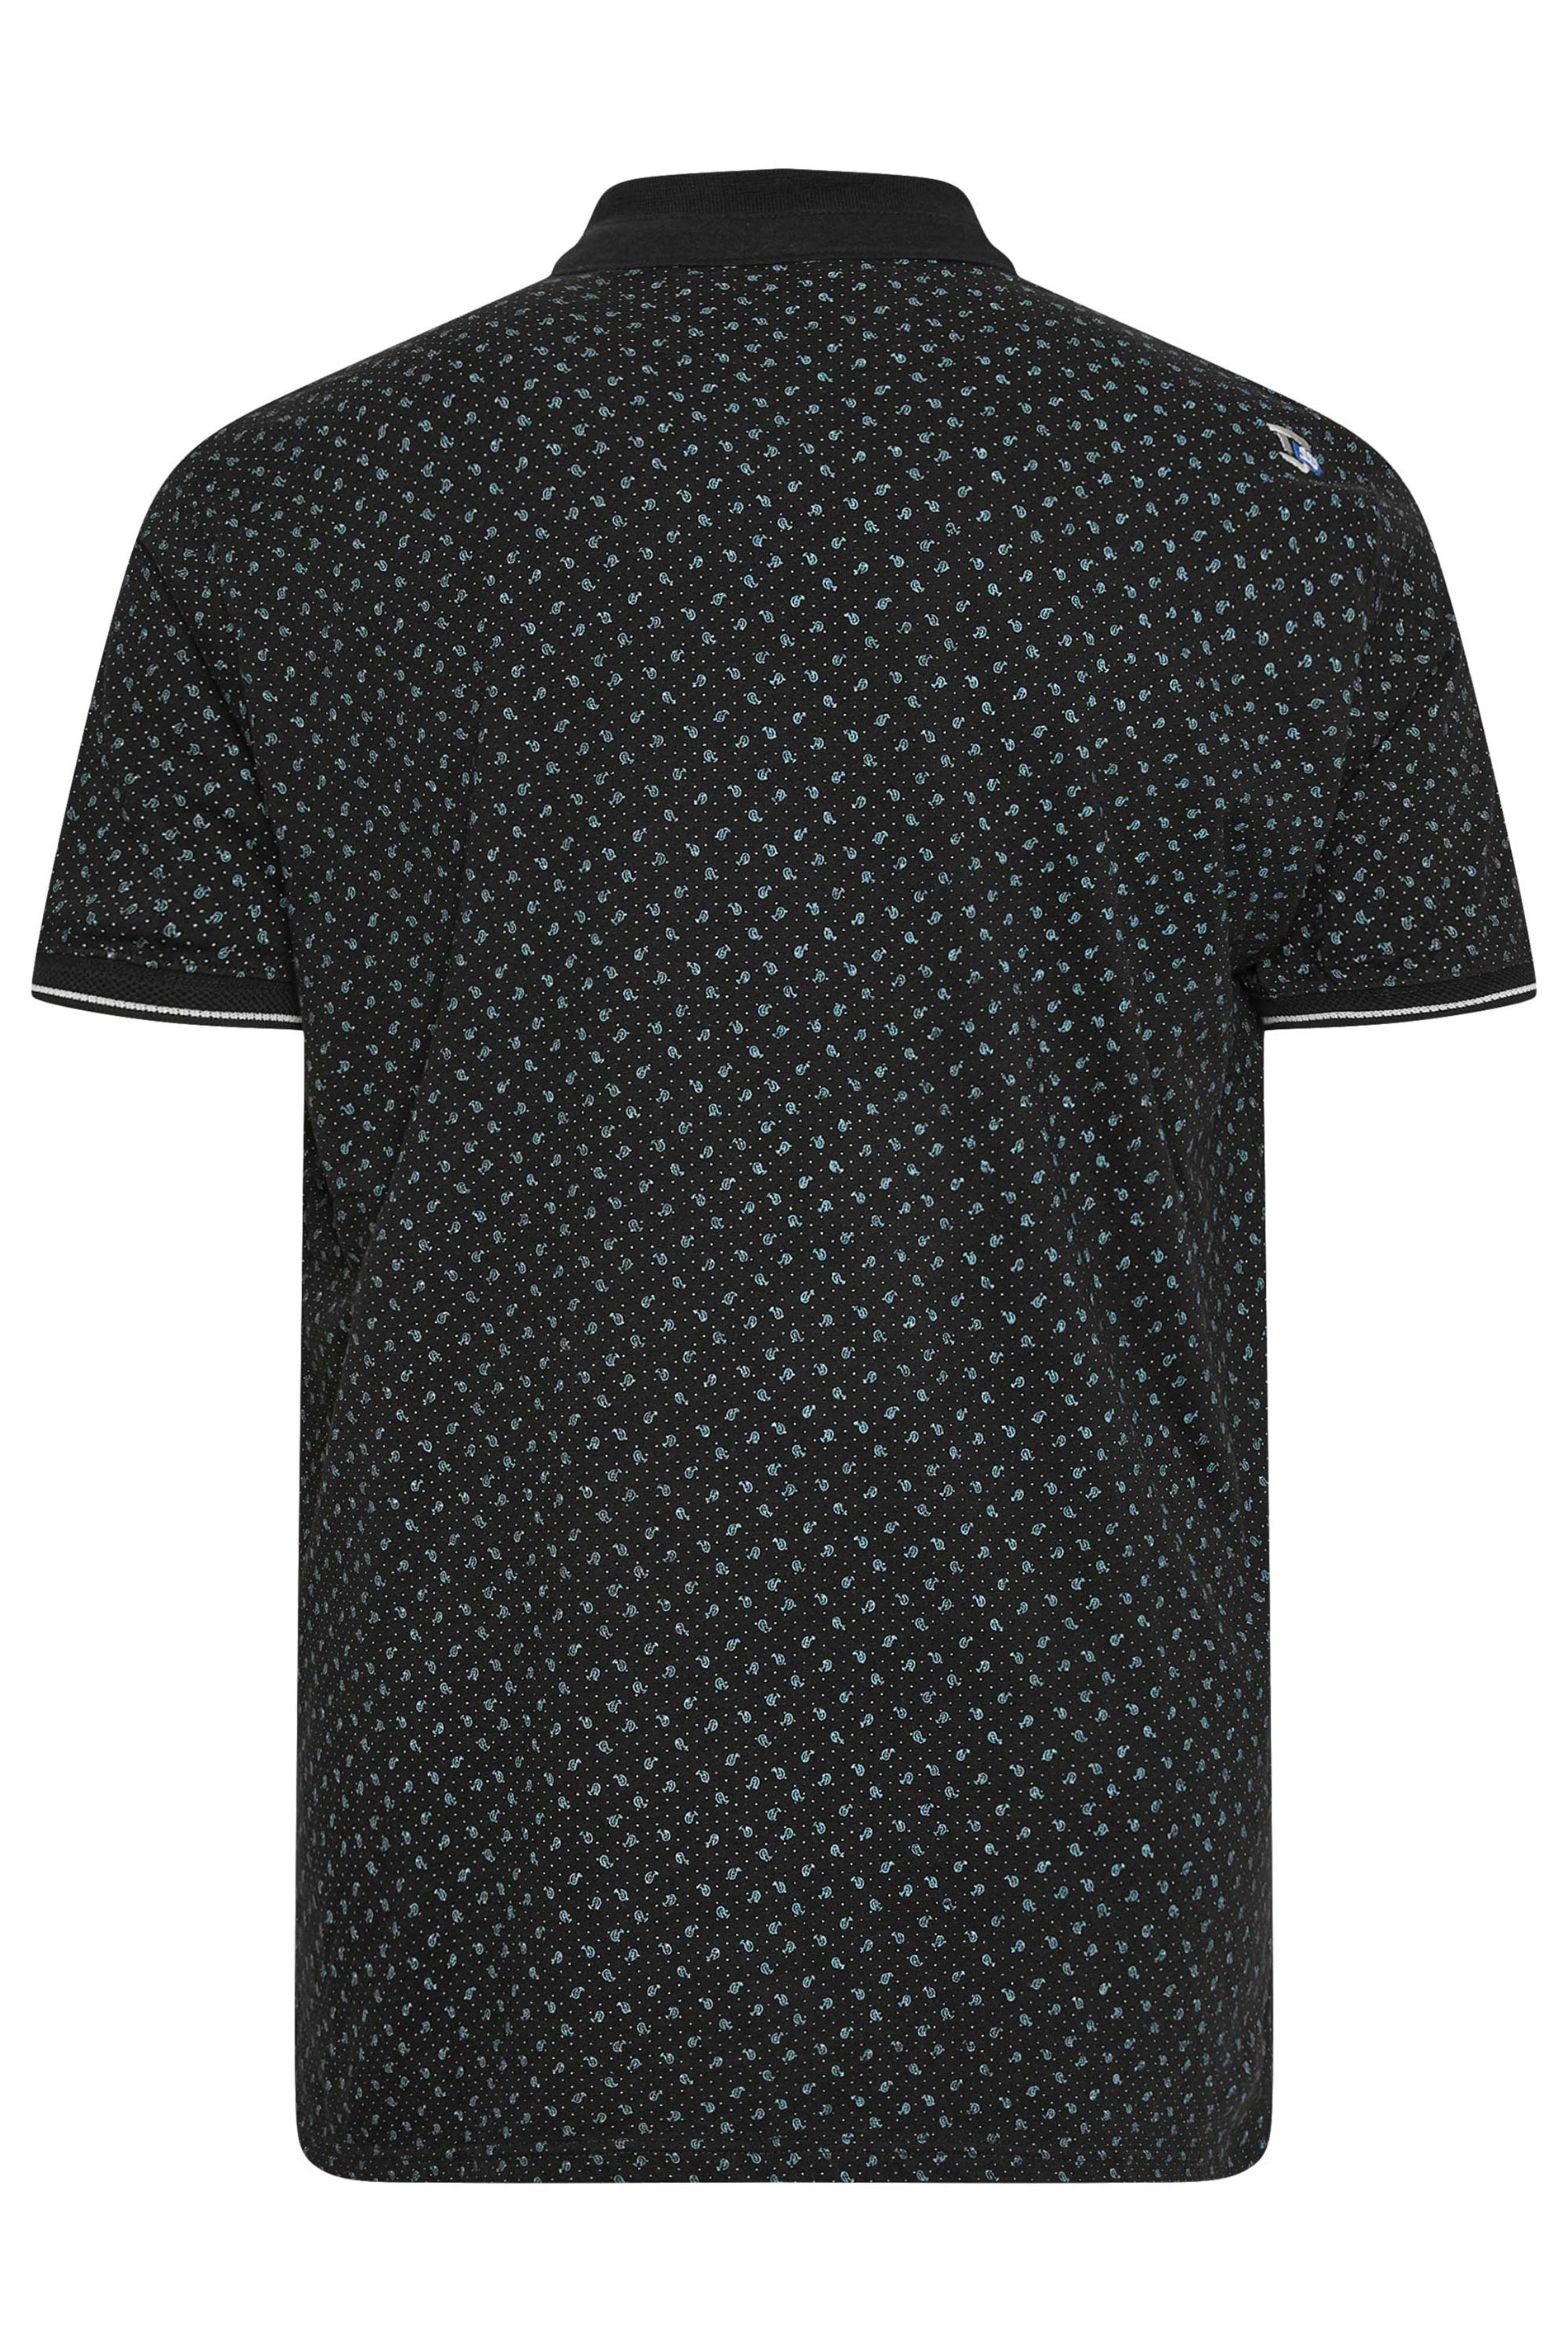 D555 Big & Tall Black Spot Print Jacquard Collar Polo Shirt | BadRhino 3